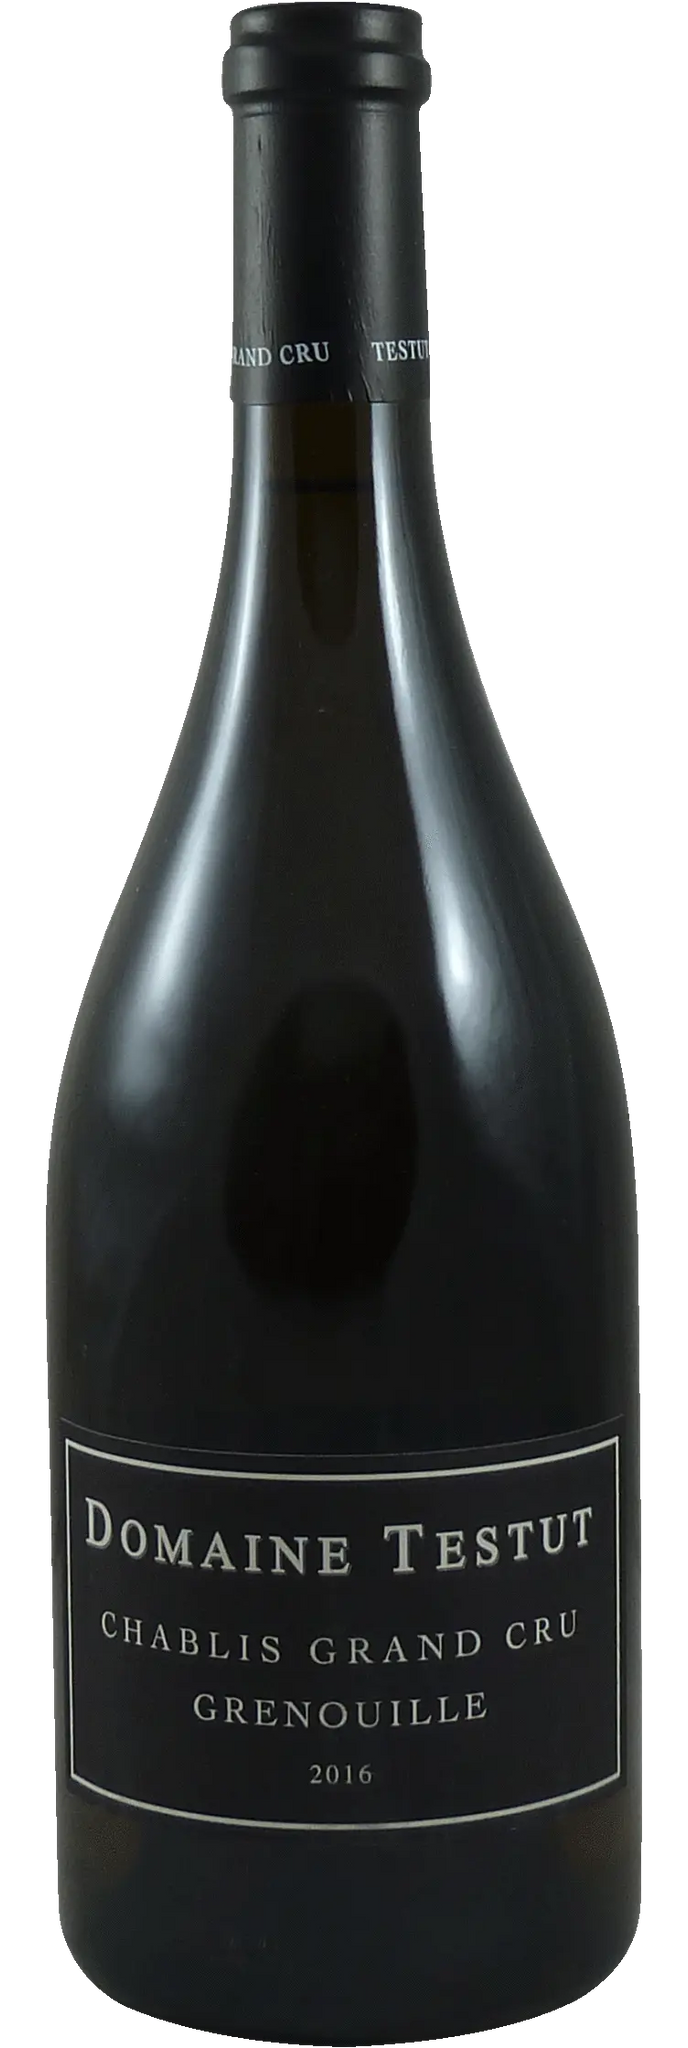 Chablis Grand Cru Grenouille Blanc - Domaine Testut 2016 (1x75cl) - TwoMoreGlasses.com